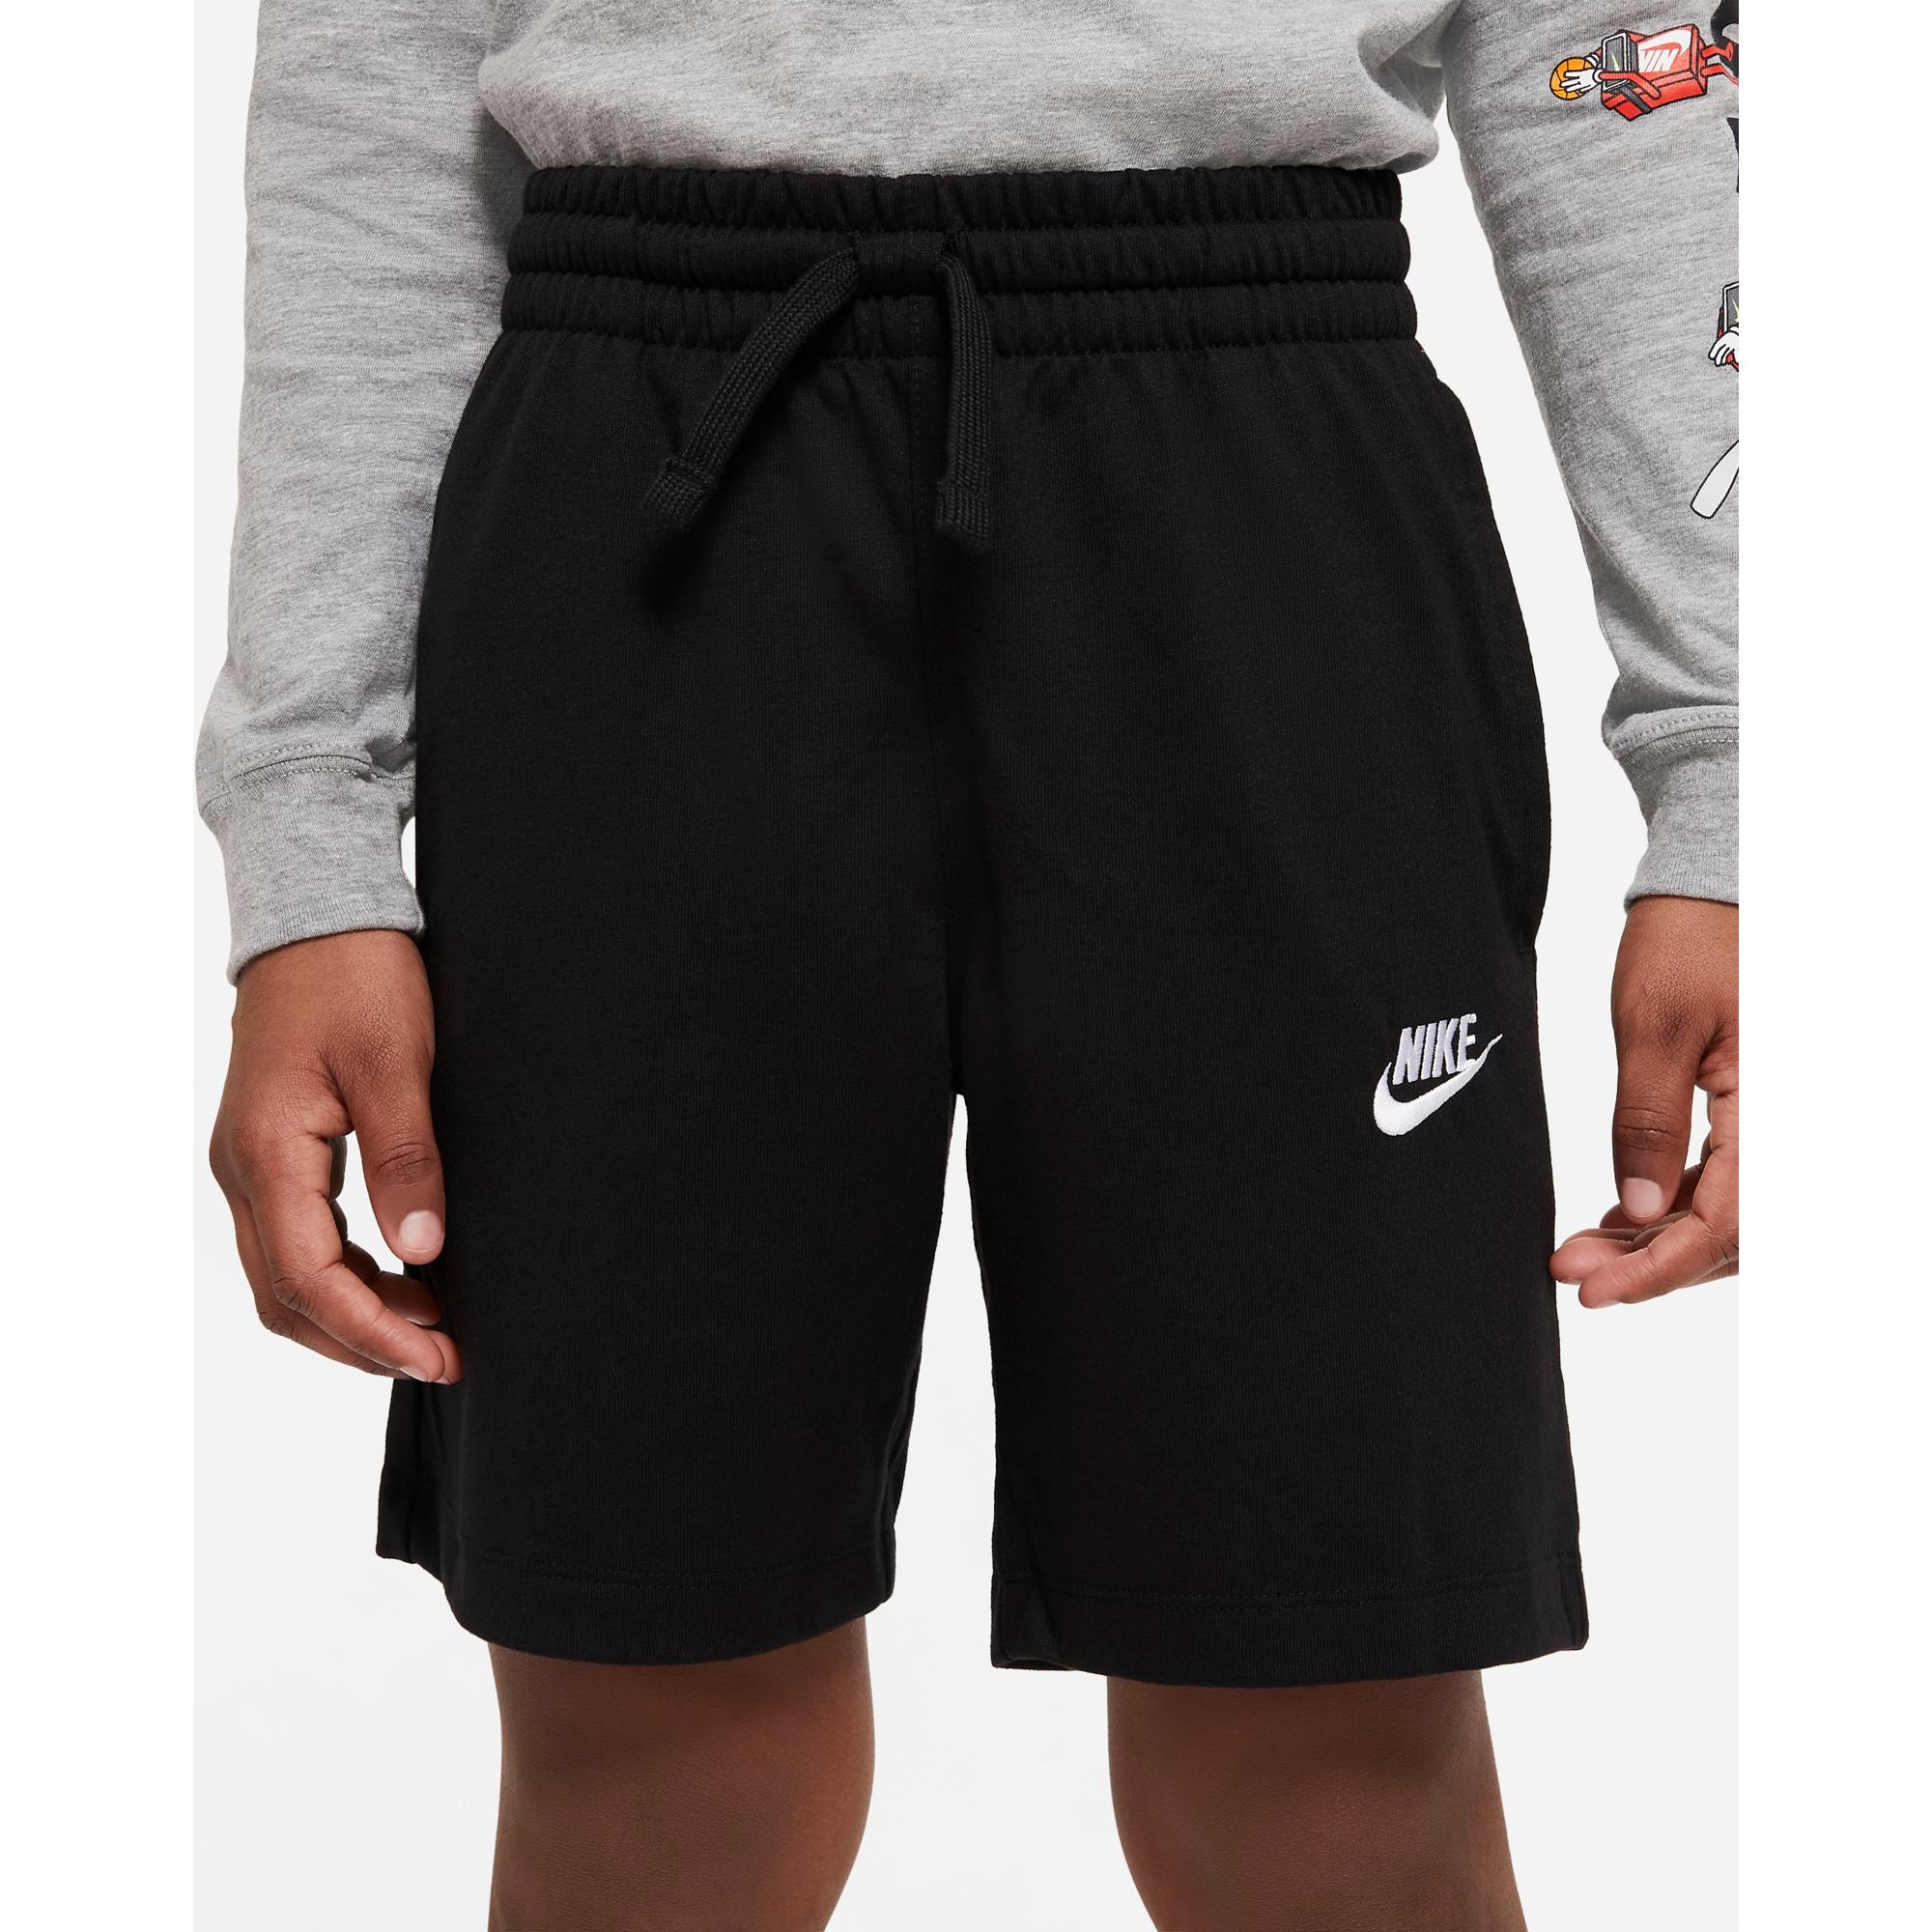 Boys Jersey Shorts